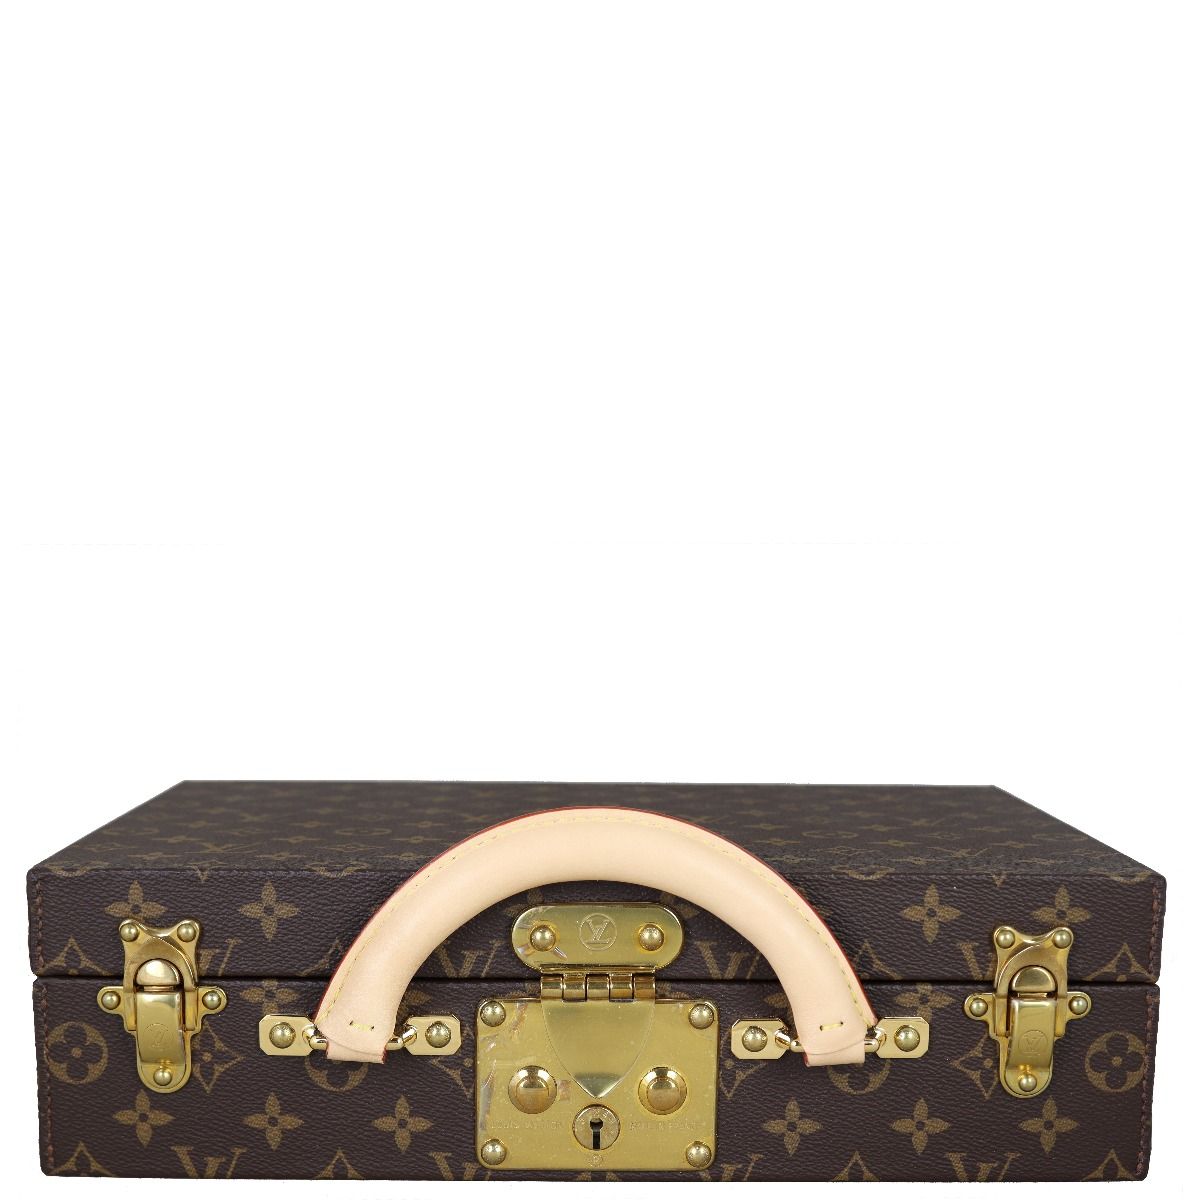 Louis Vuitton Box Bag 